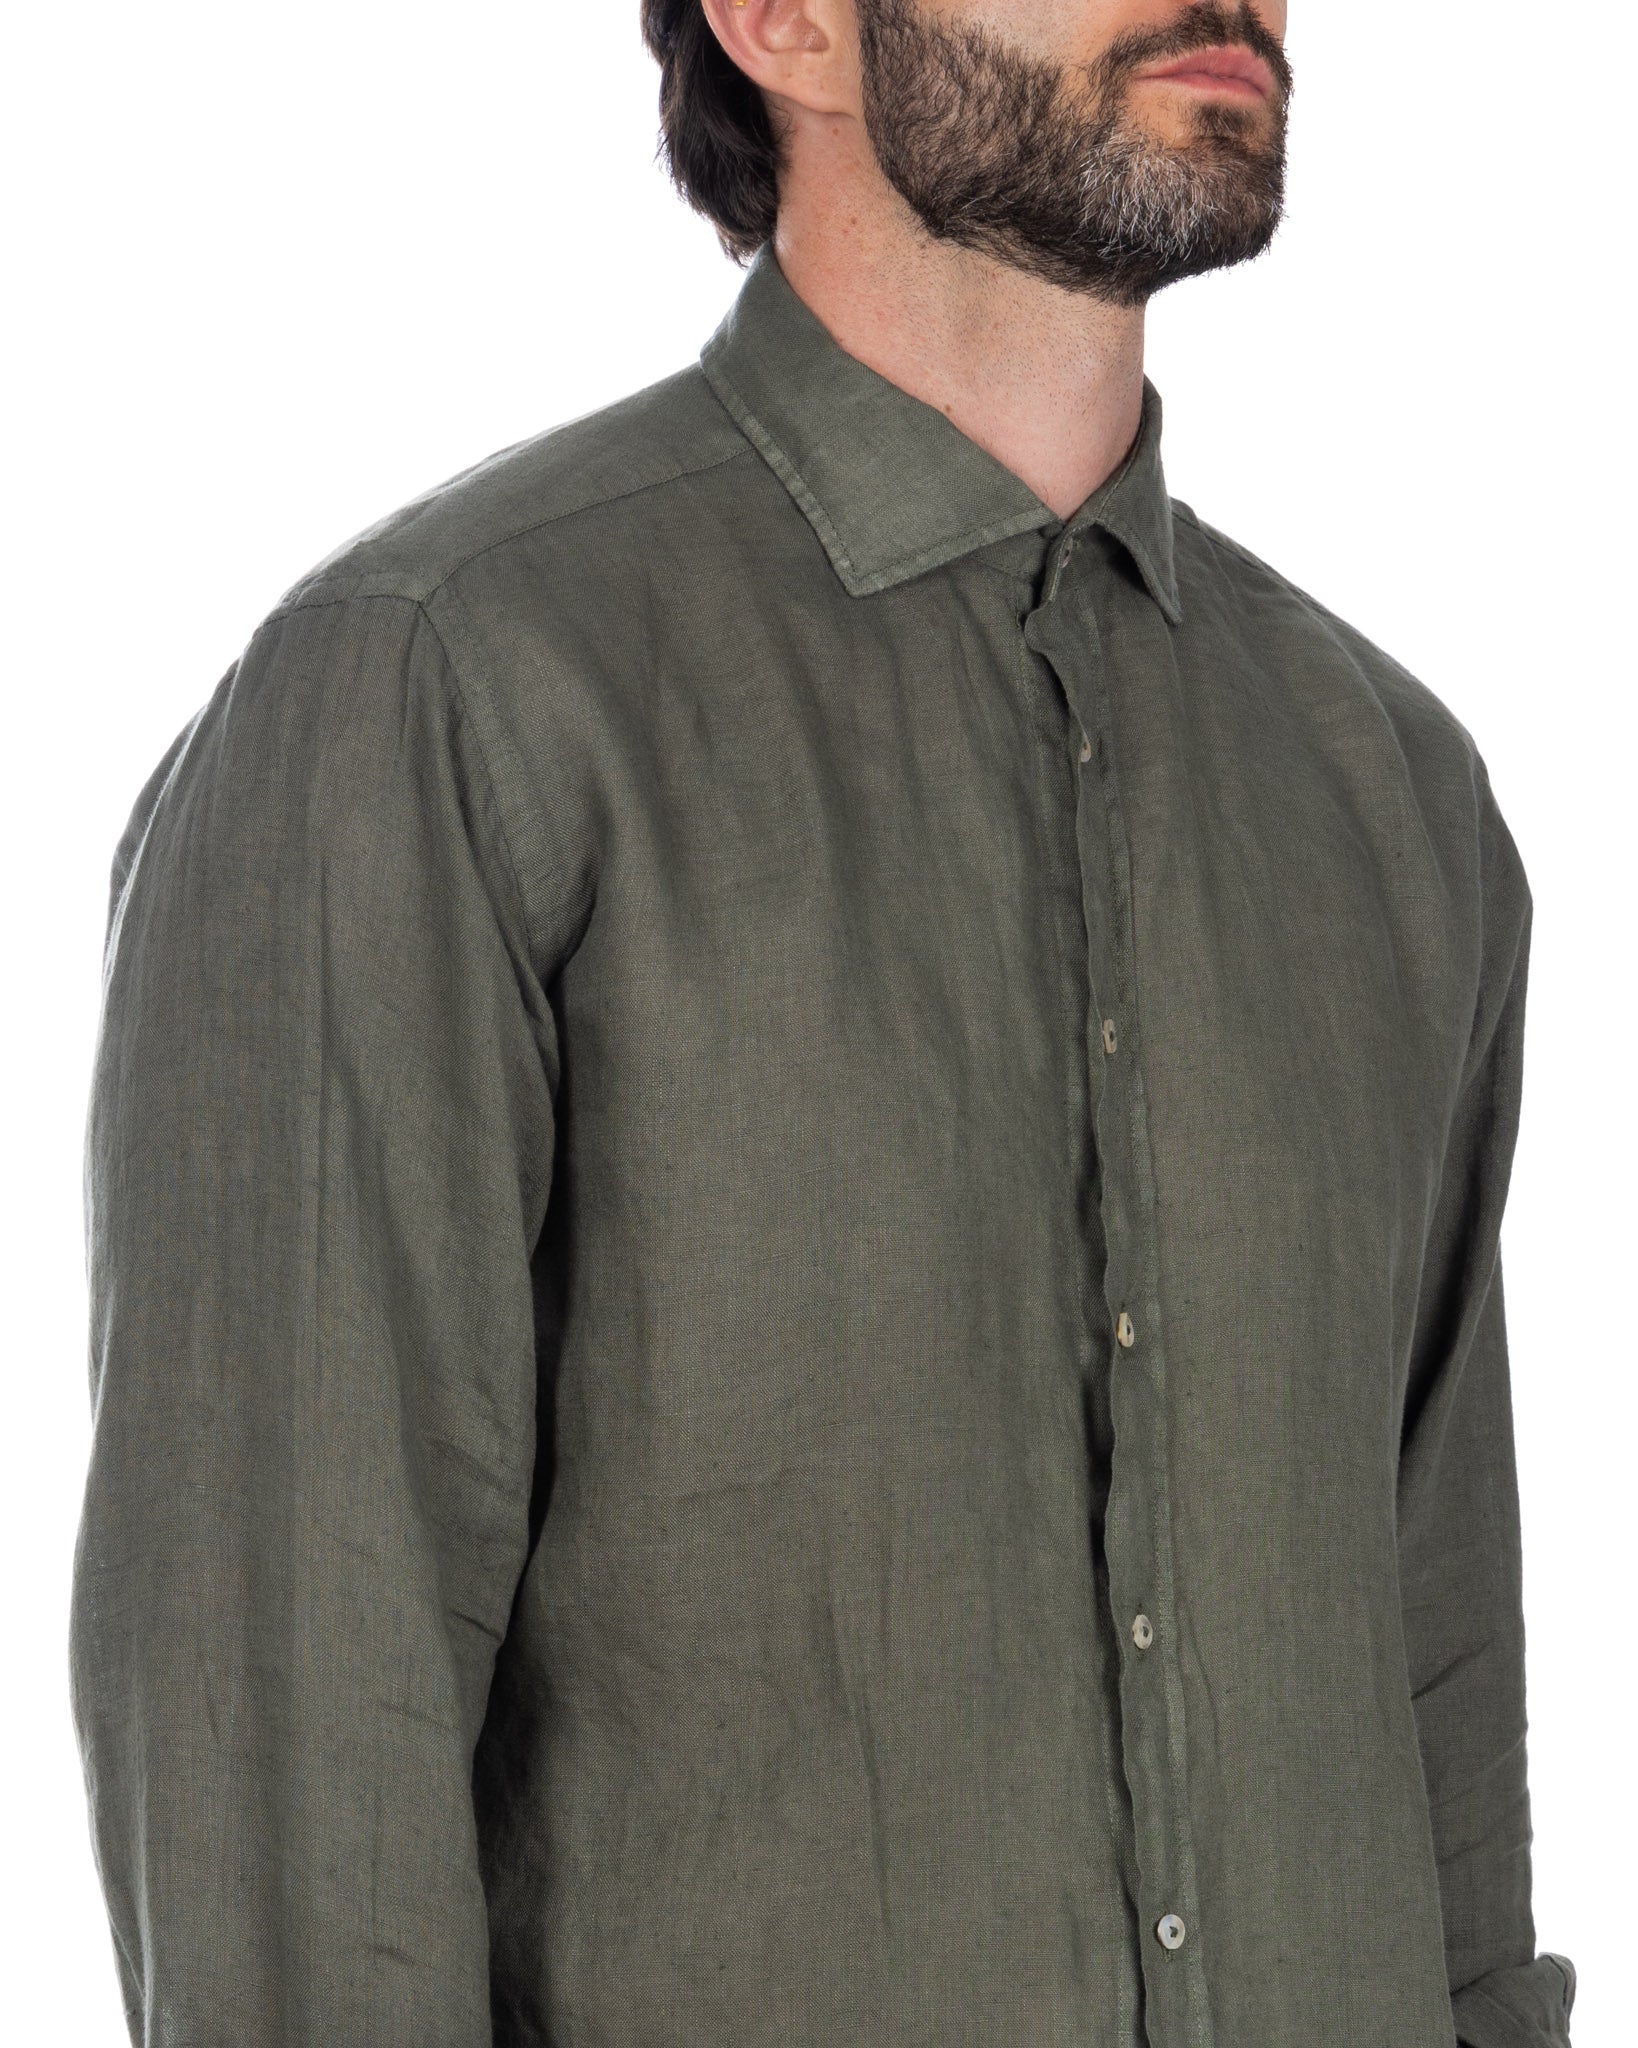 Montecarlo - shirt in pure military linen